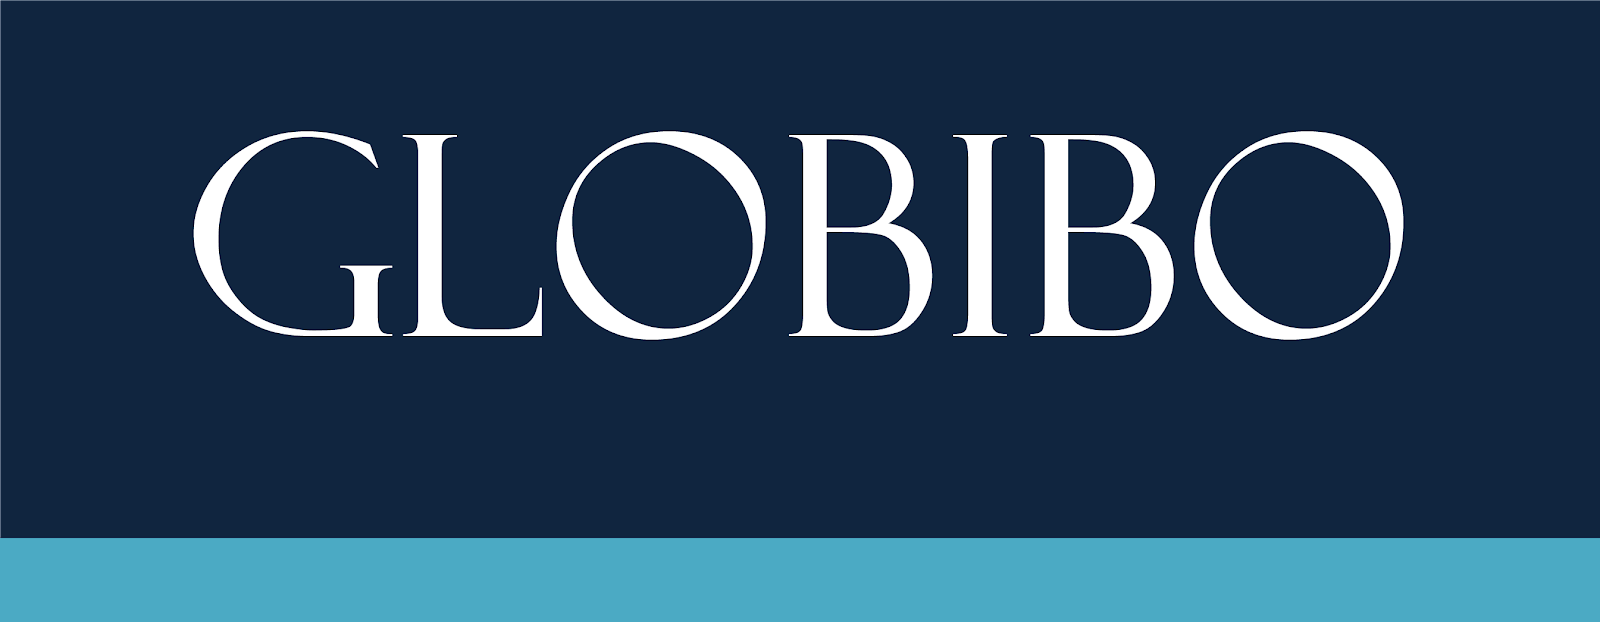 Globibo Articles & Research